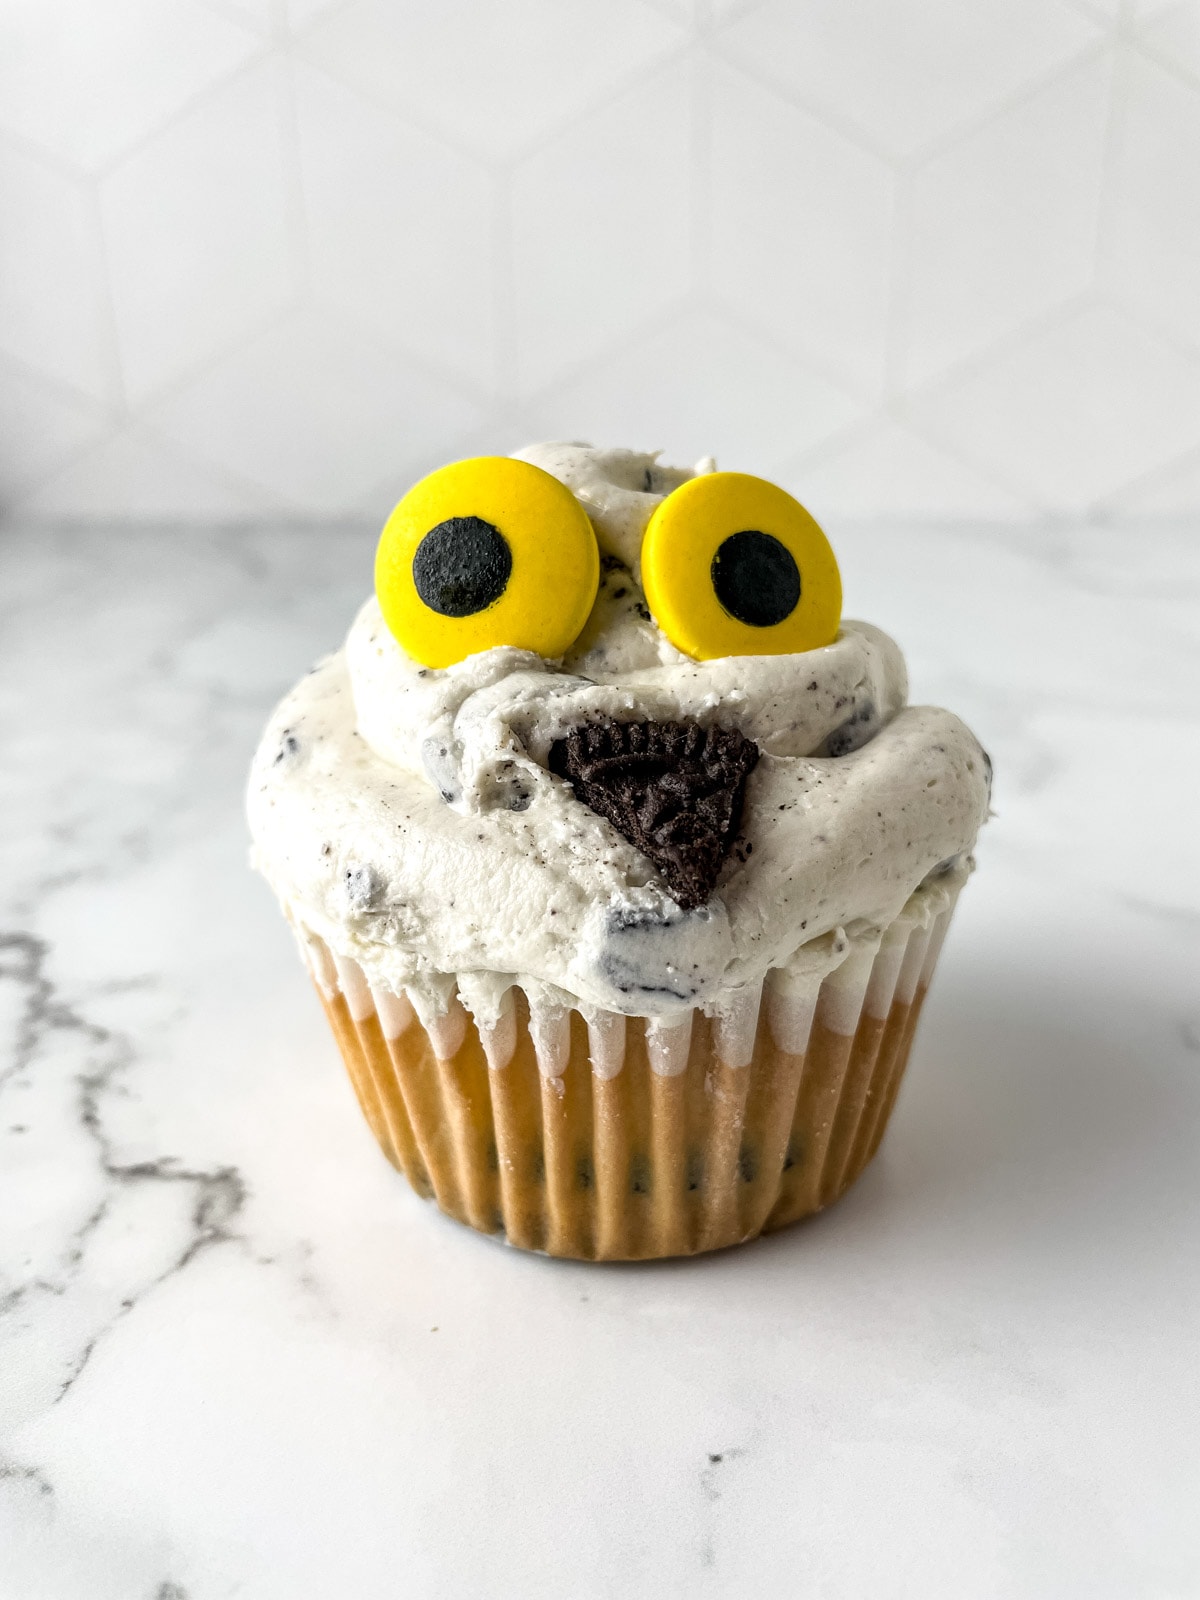 Oreo cupcake made to look like an owl